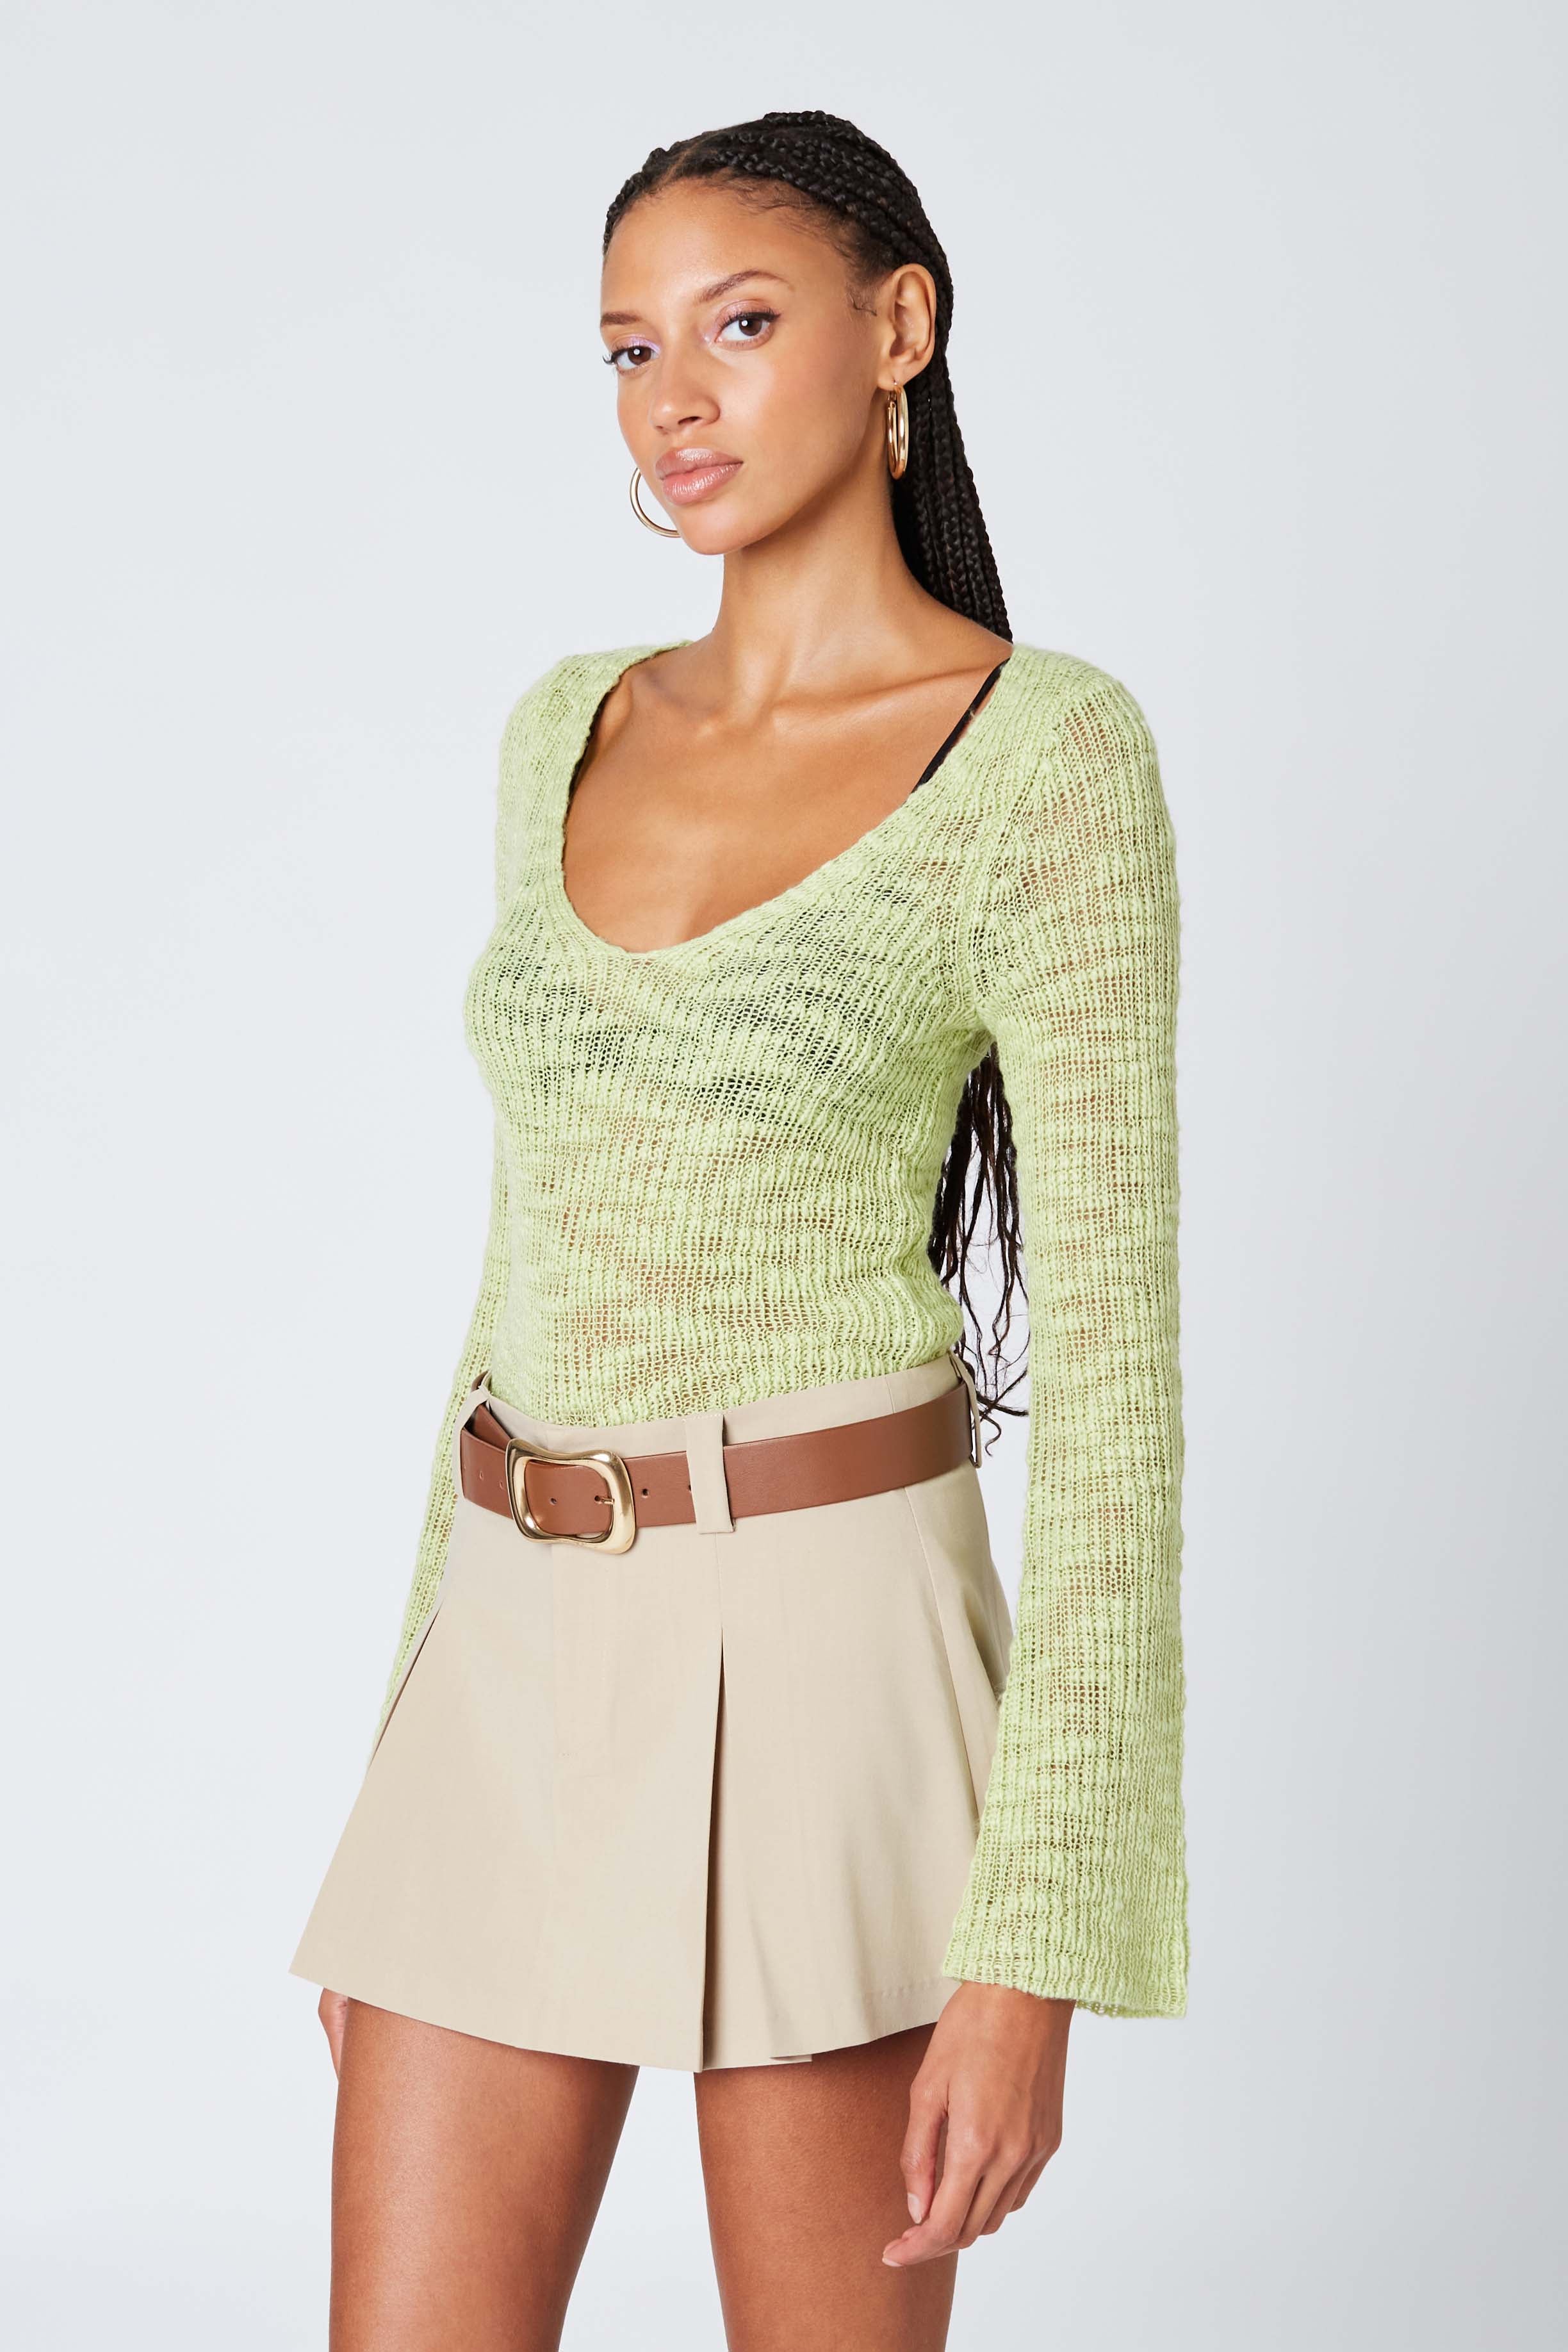 Sheer Knit Long Sleeve Top in Celery Side View